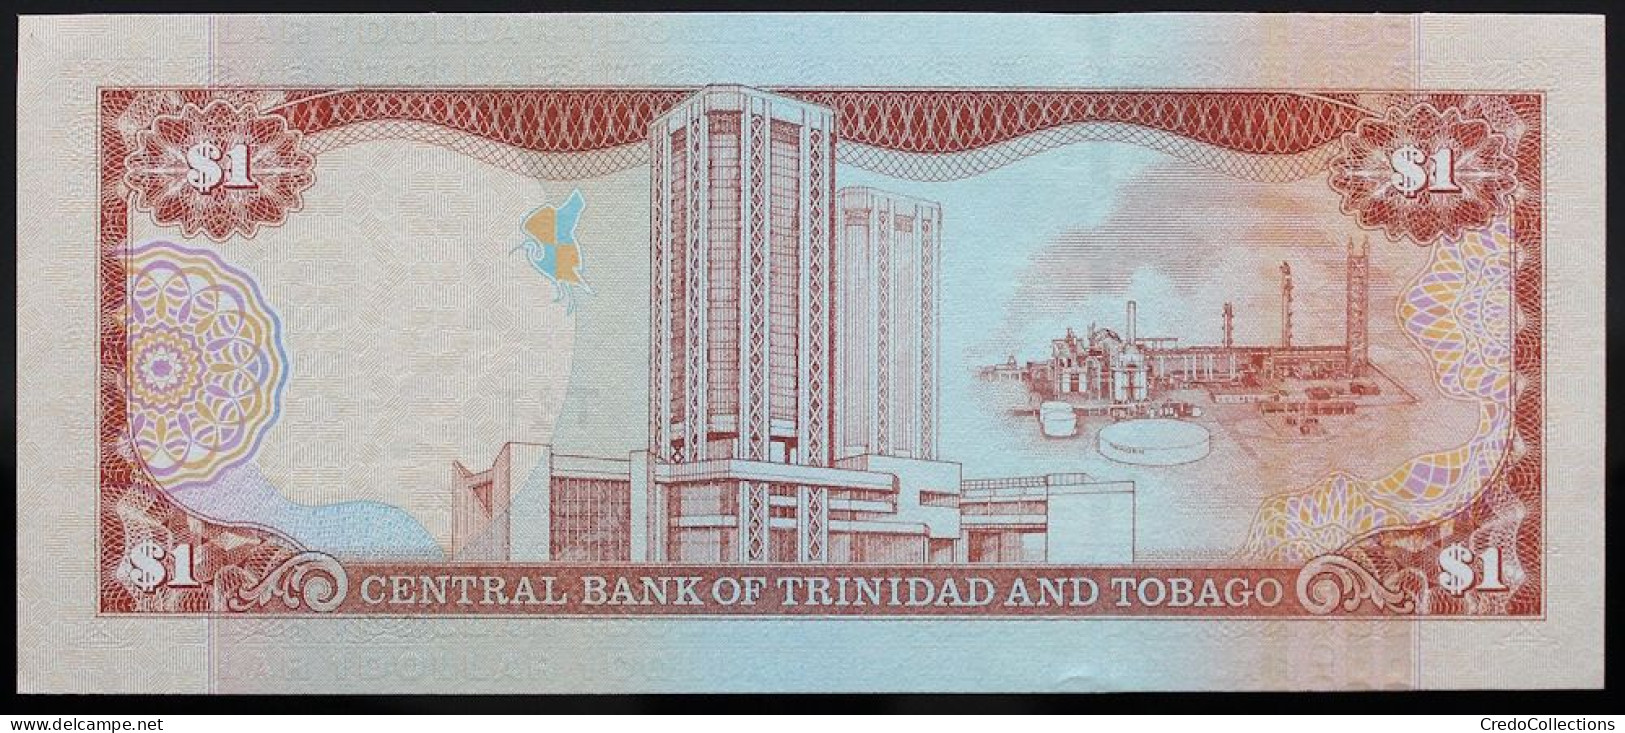 Trinitad Et Tobago - 1 Dollar - 2002 - PICK 41 - NEUF - Trindad & Tobago